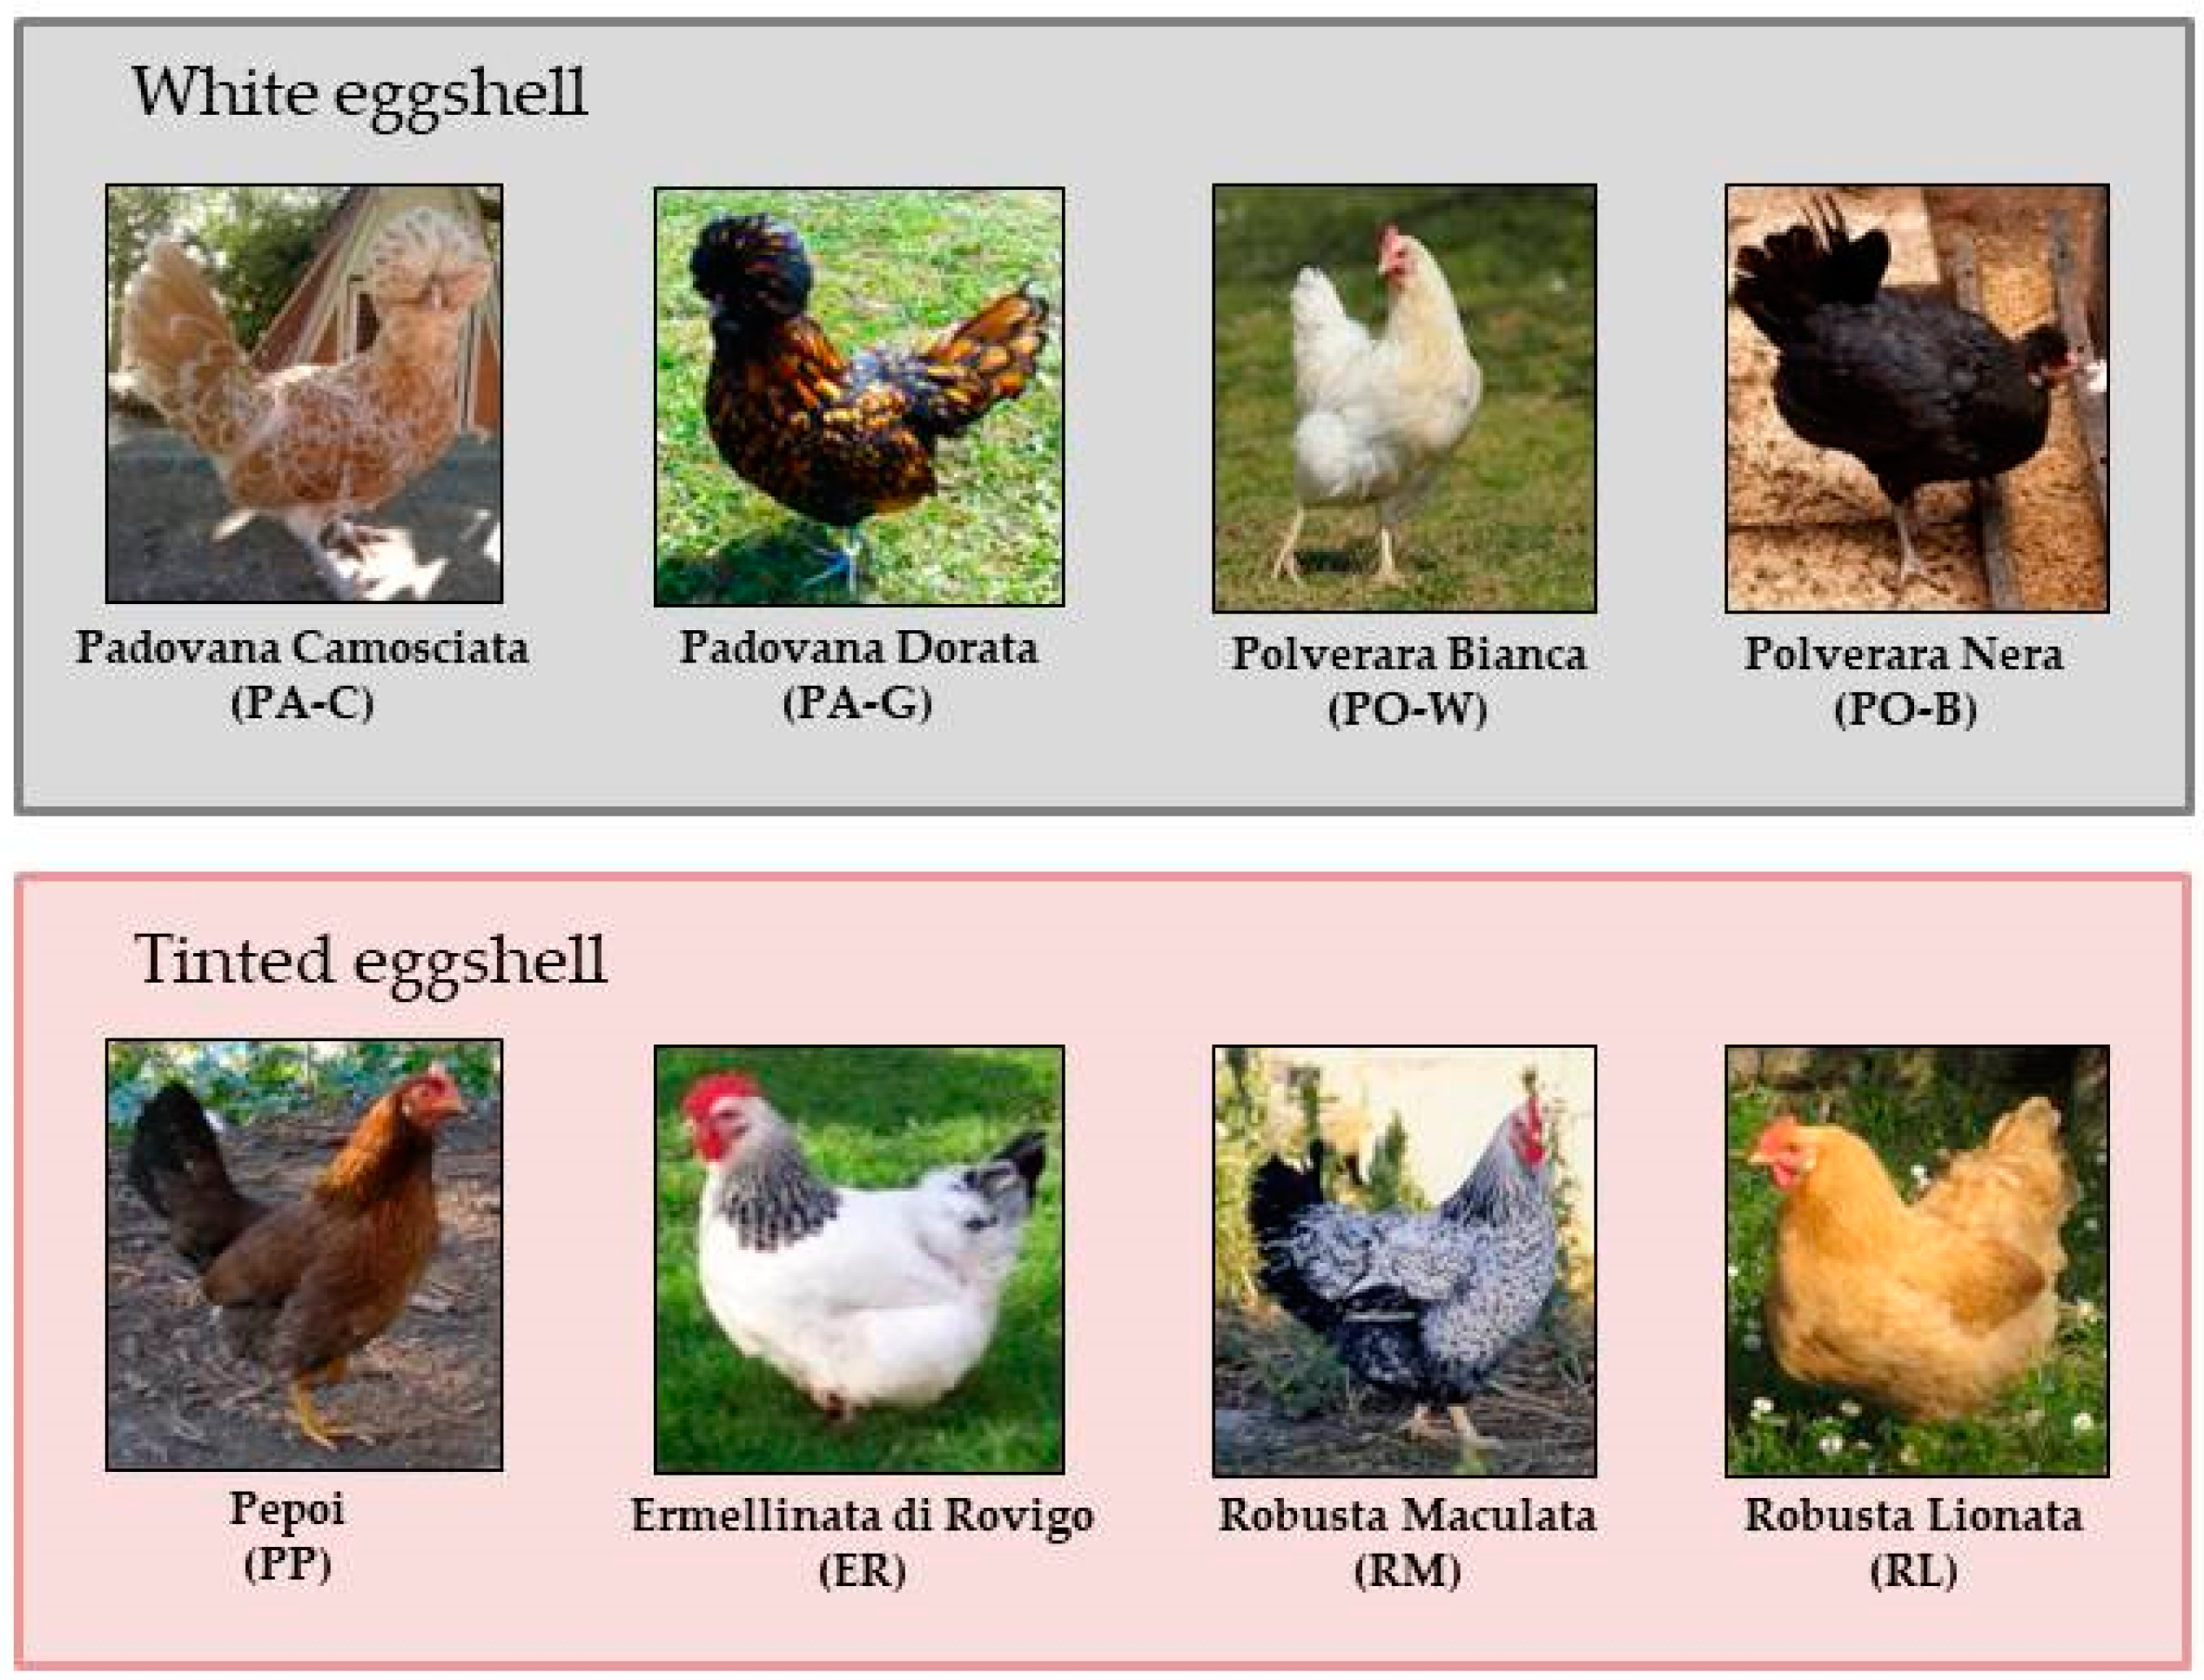 III. Benefits of Hens in Local Ecosystems